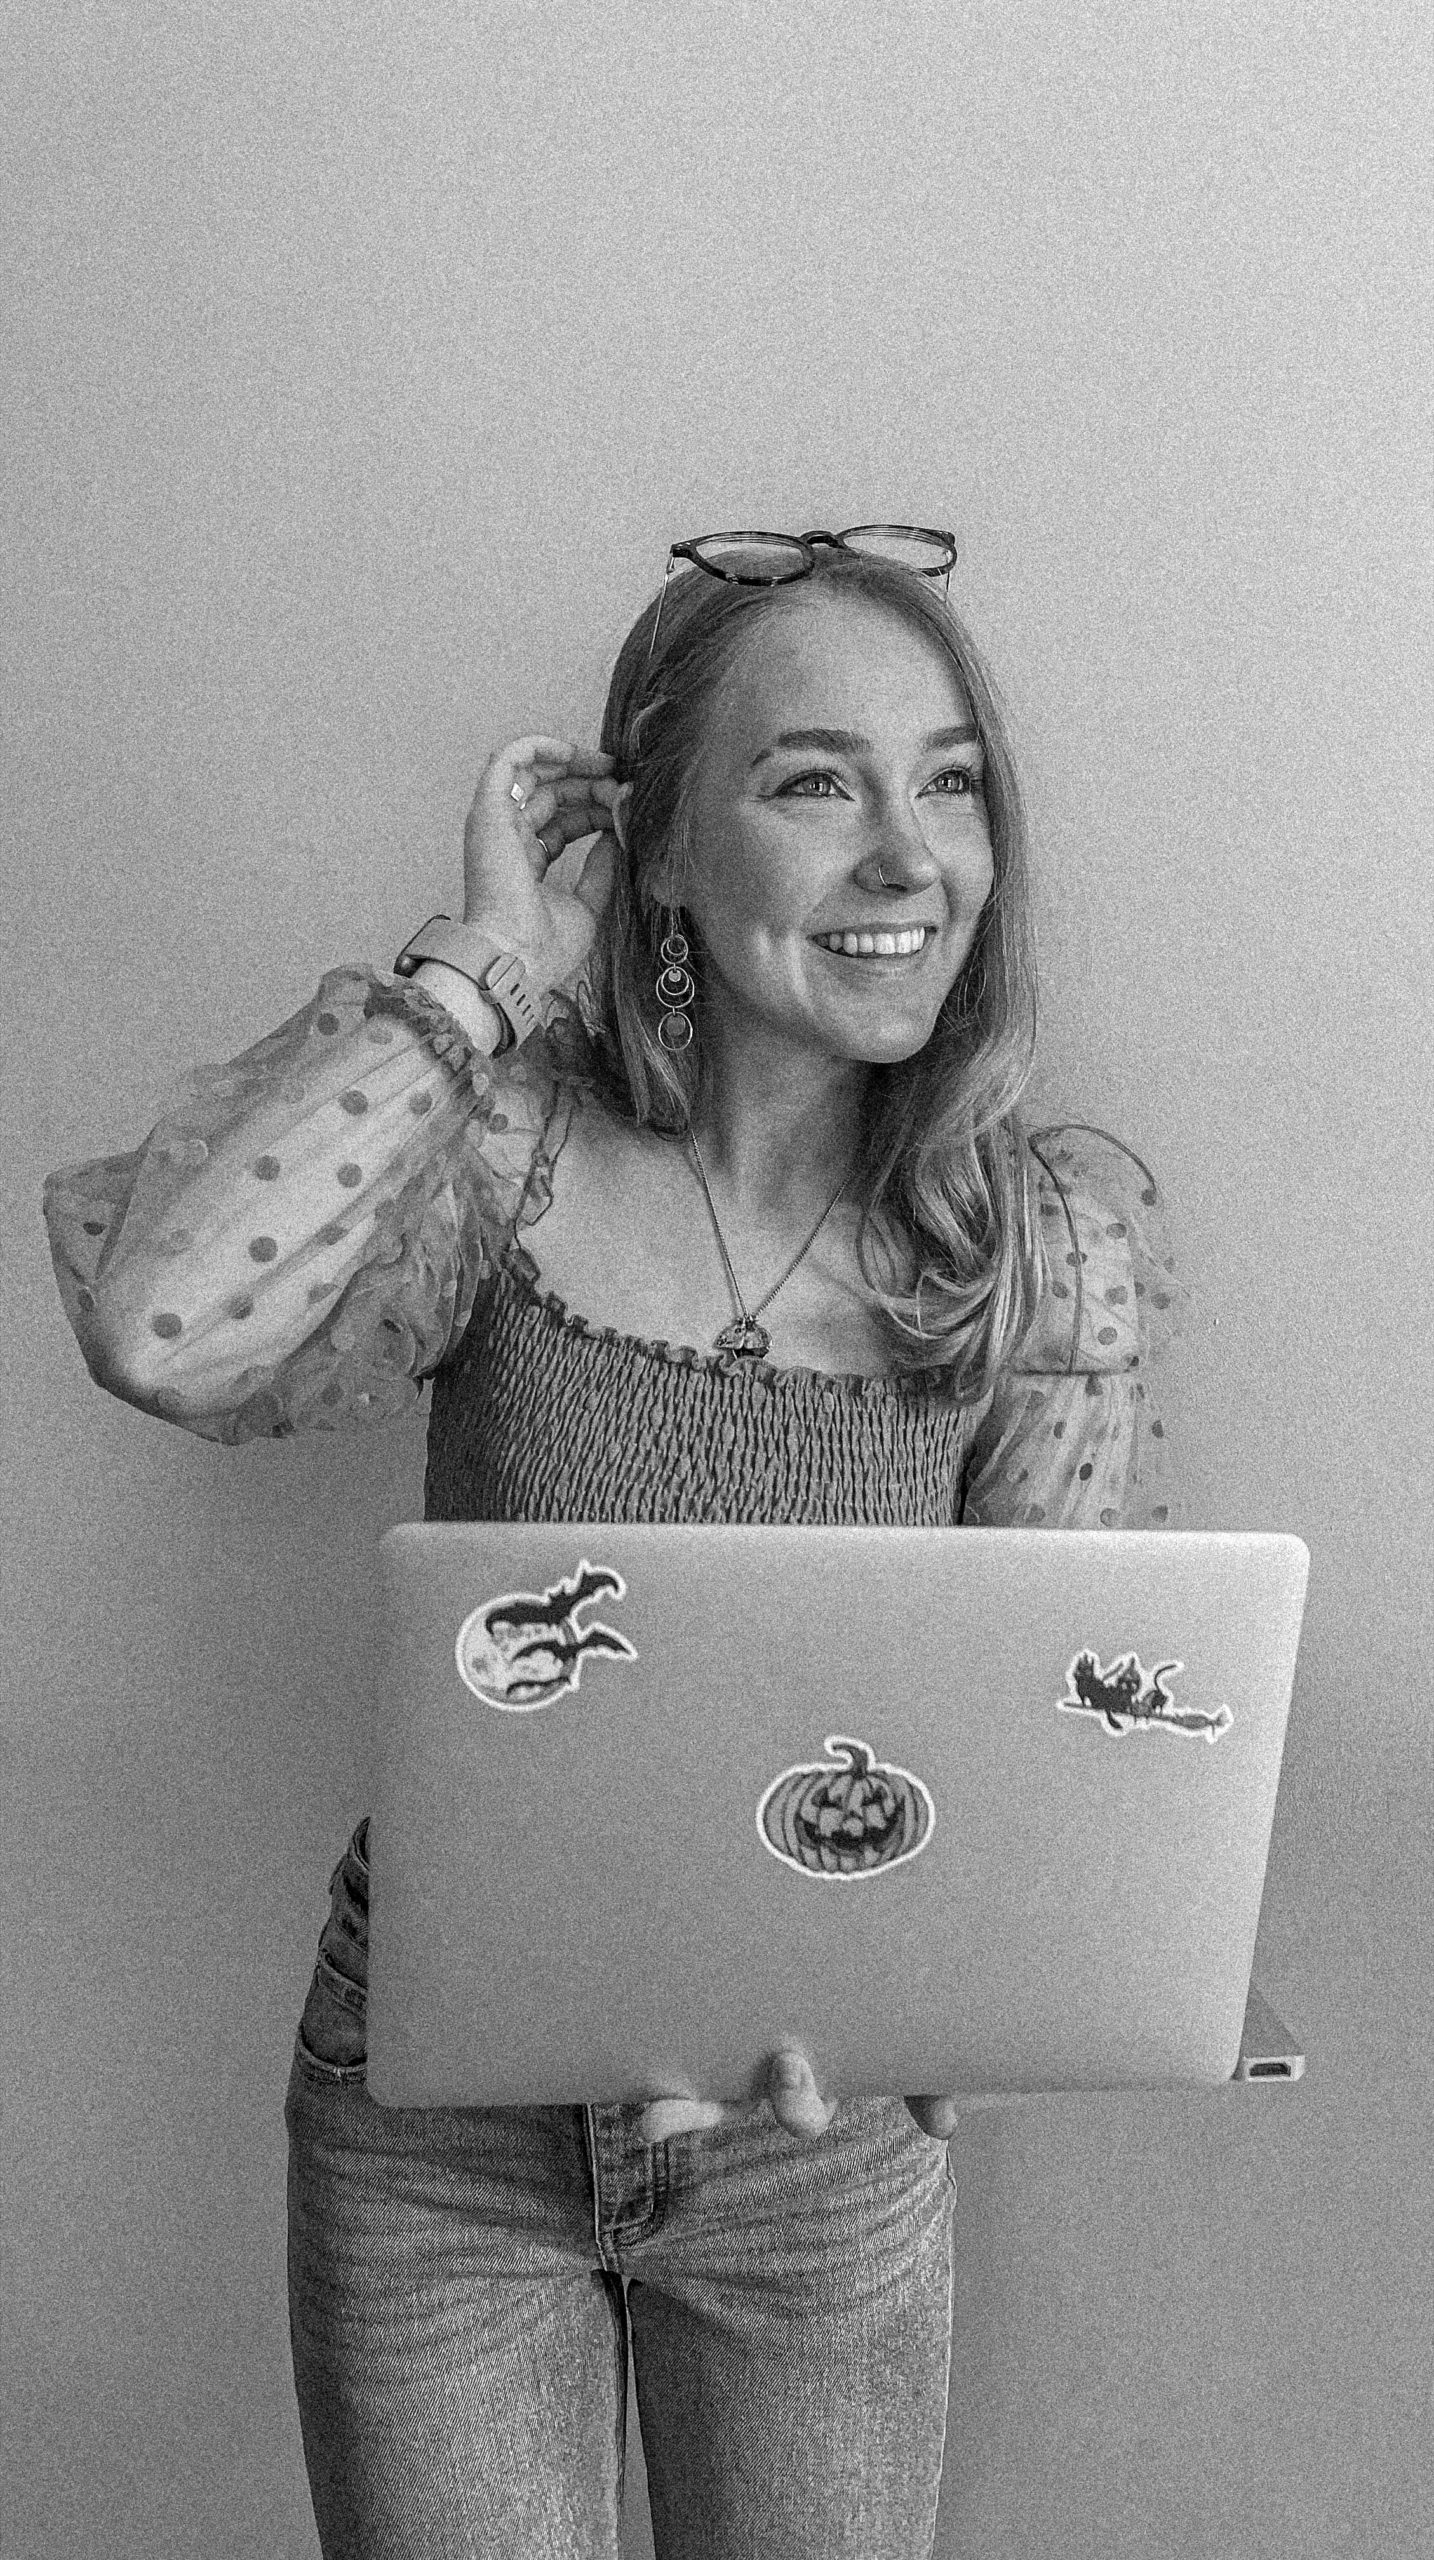 Jenna Rothwein holding her laptop and smiling.